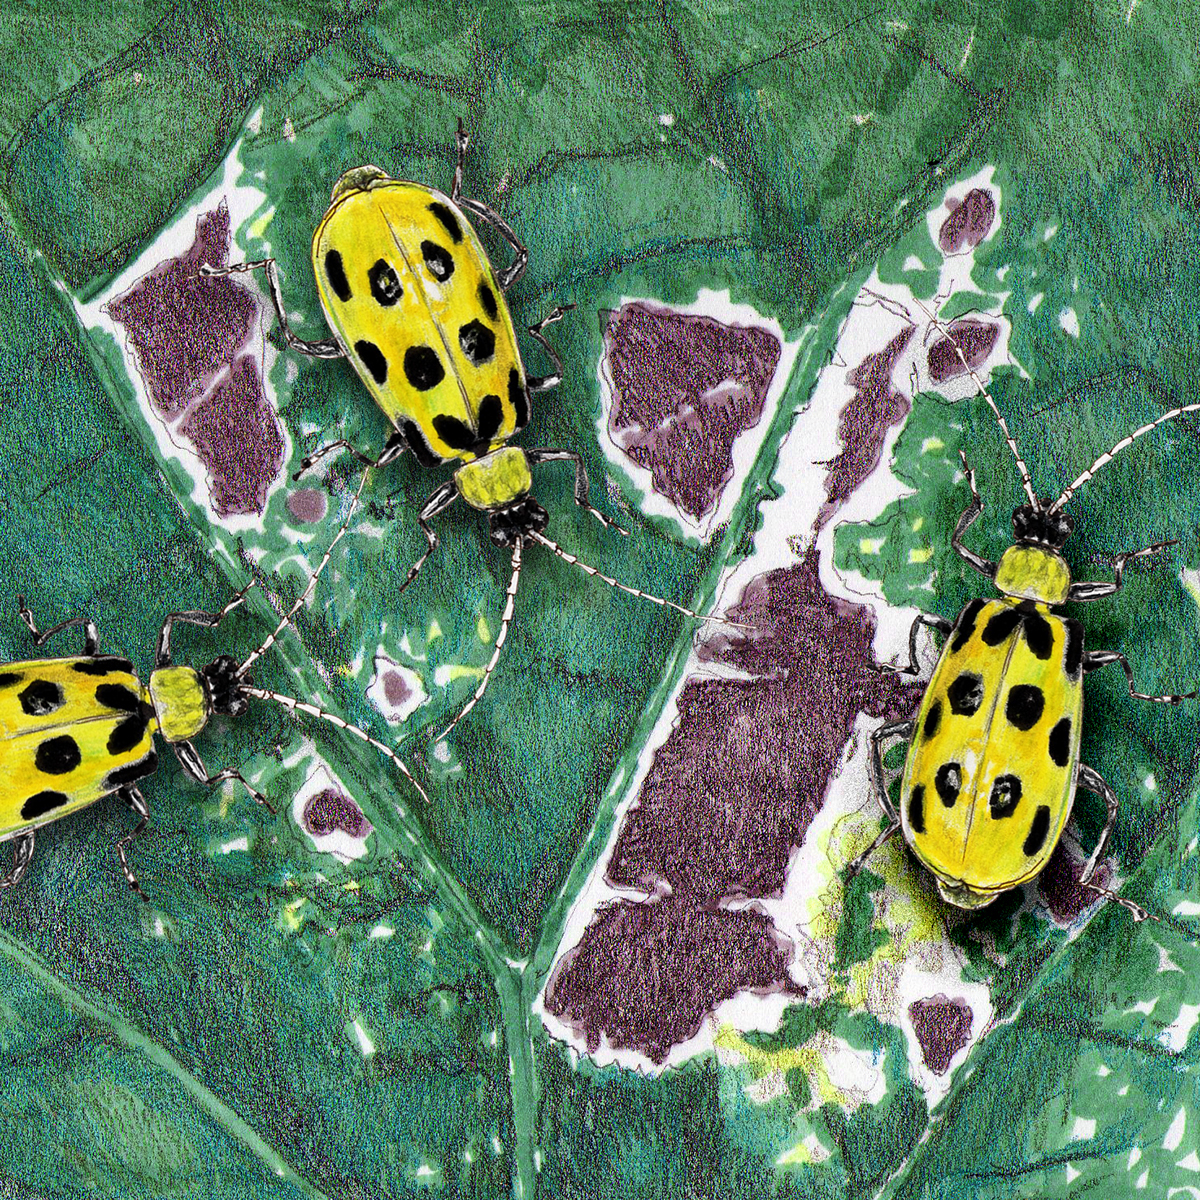 Insects botanical animals slug beetle caterpillars Nature garden